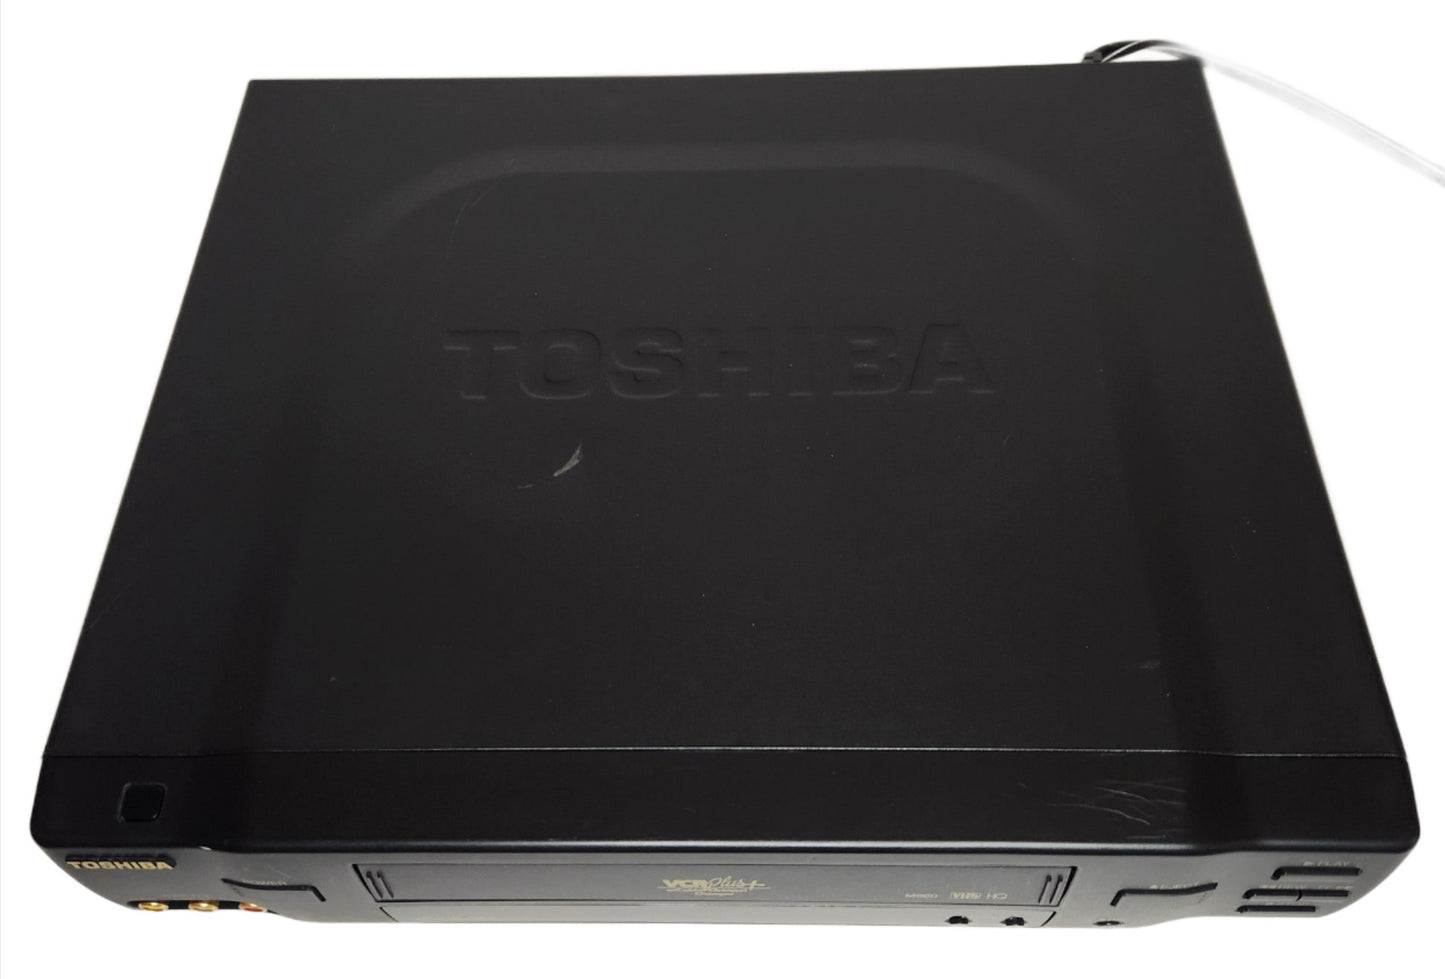 Toshiba M-660 VCR, 4-Head Hi-Fi Stereo - Top